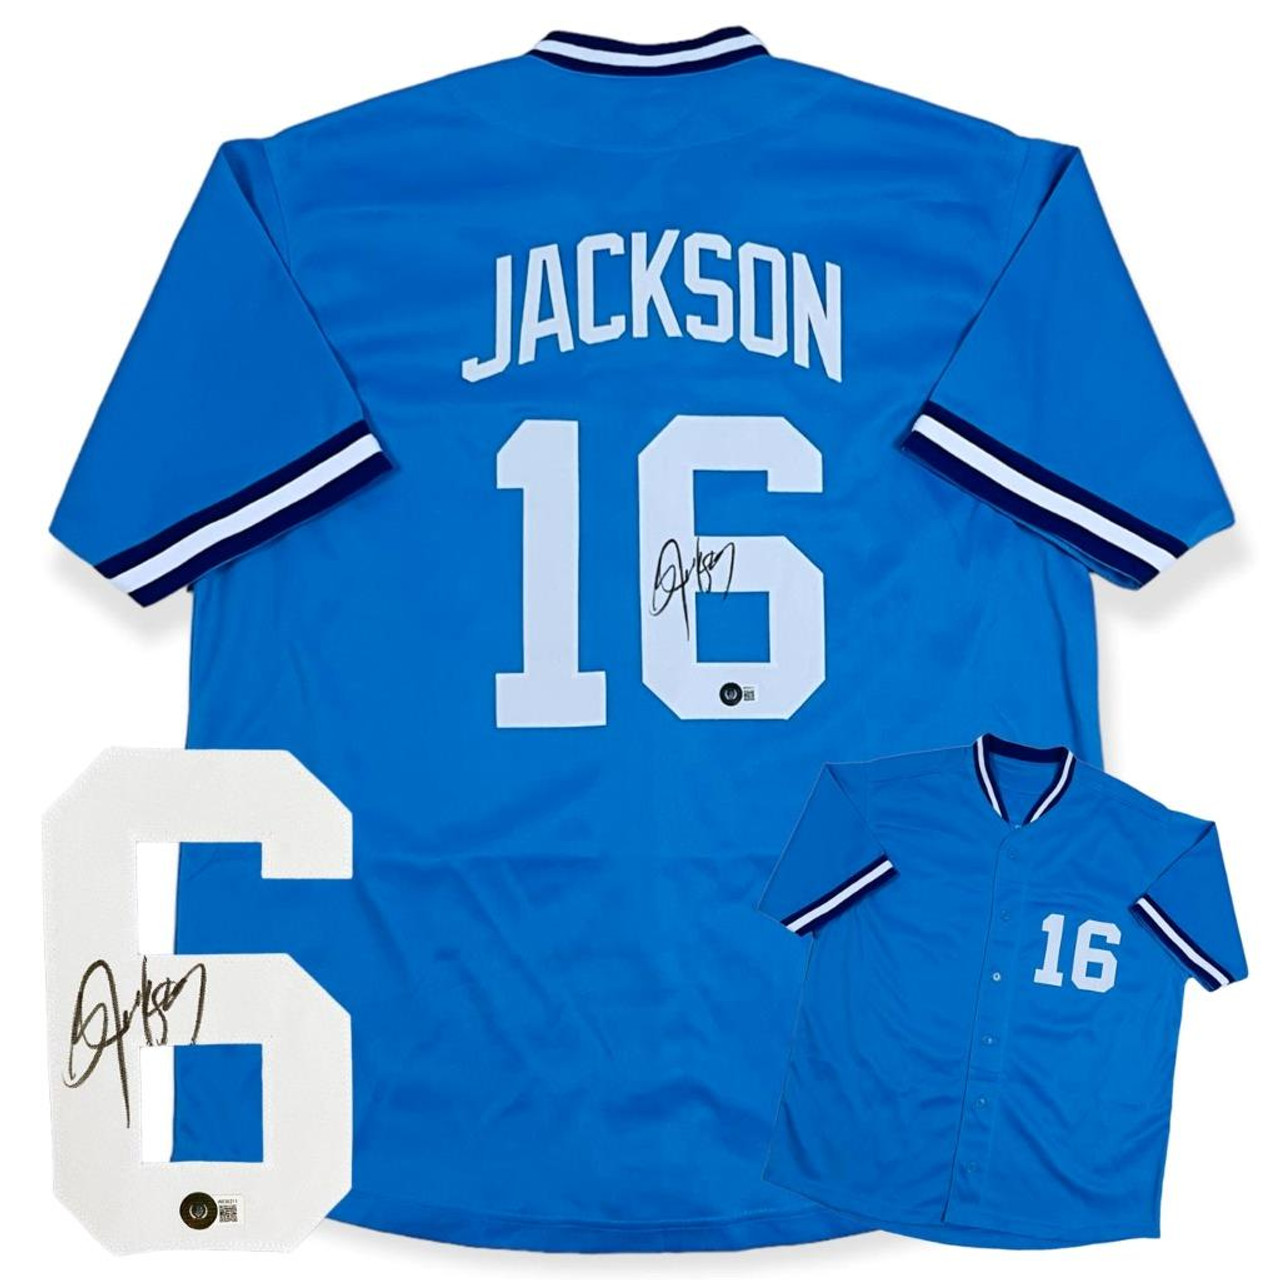 Bo Jackson Autographed Signed Baseball Jersey - Beckett Authentic